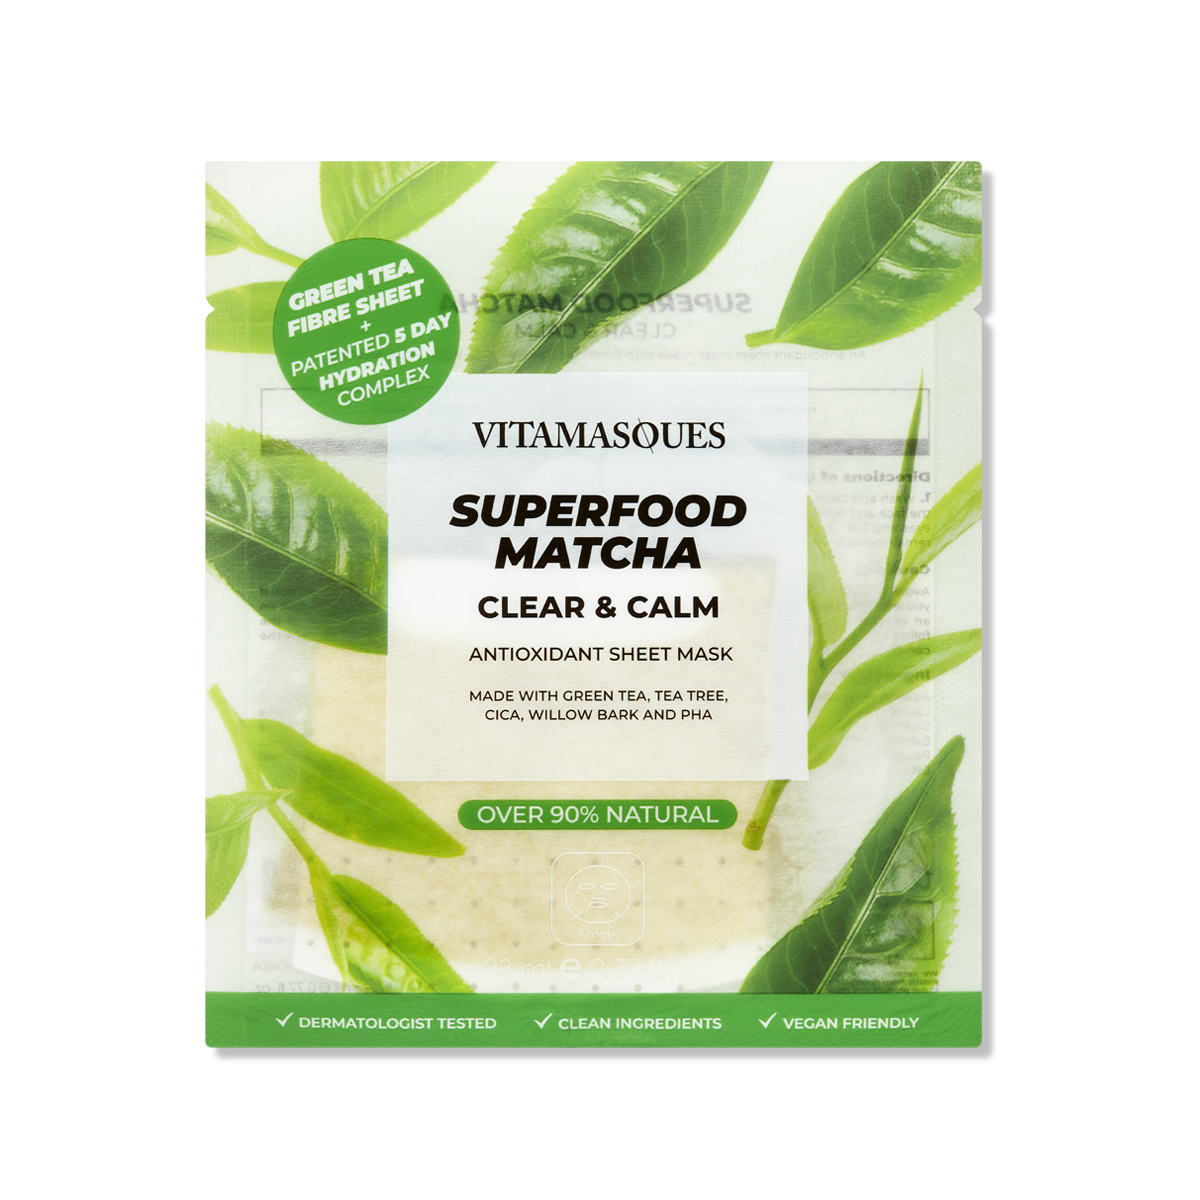 Superfood Matcha Clear & Calm Antioxidant Face Sheet Mask